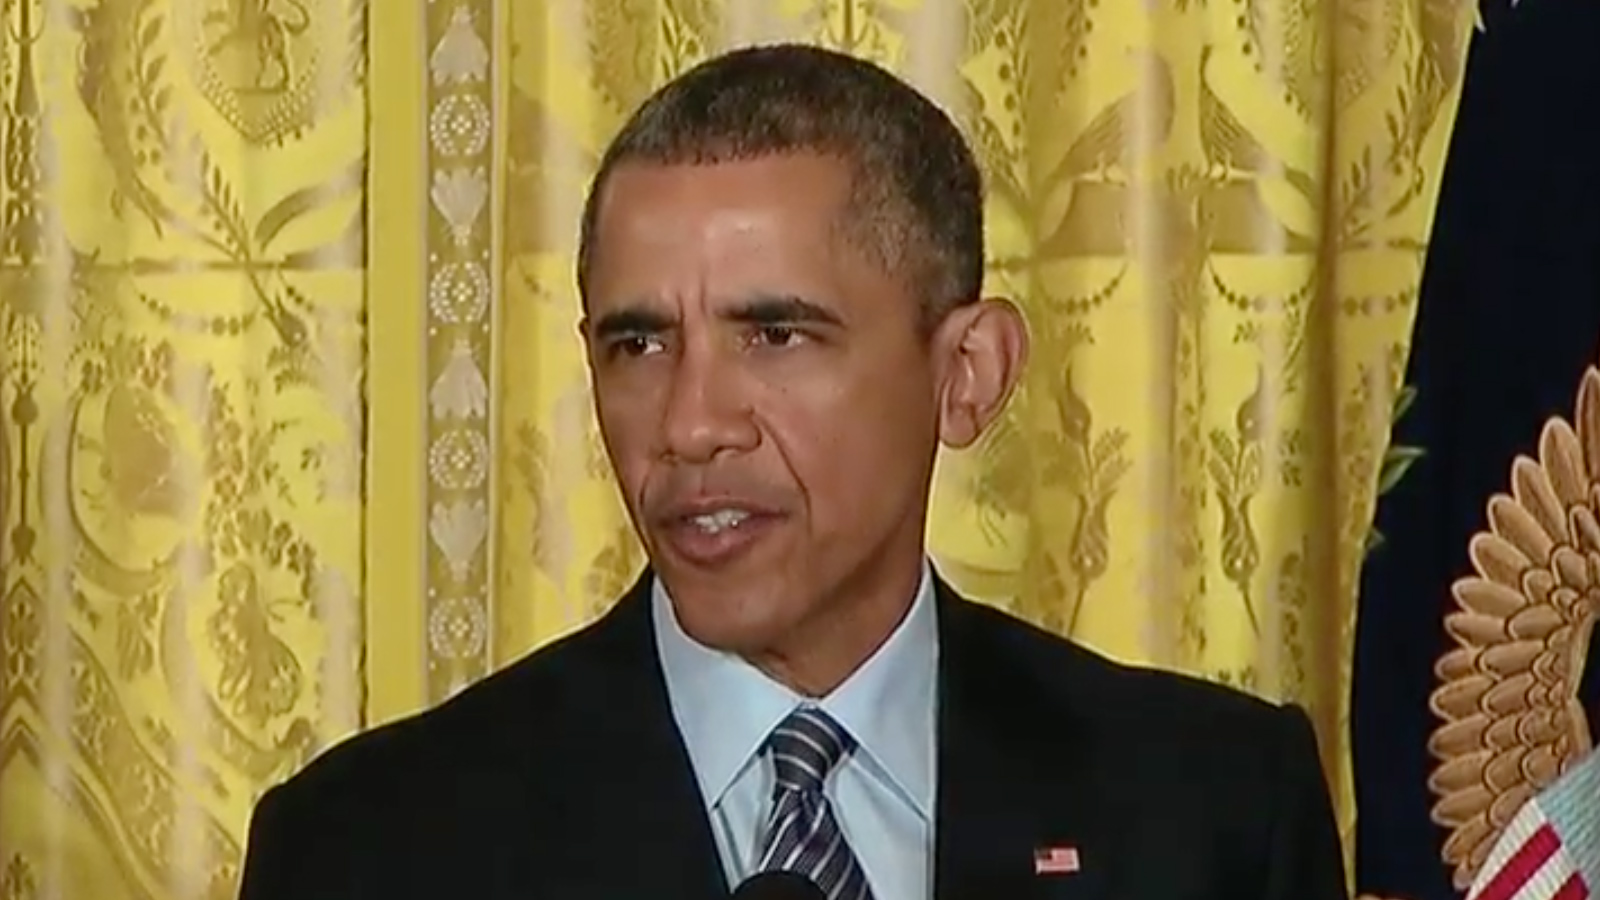 President Obama Speaks on the Clean Power Plan